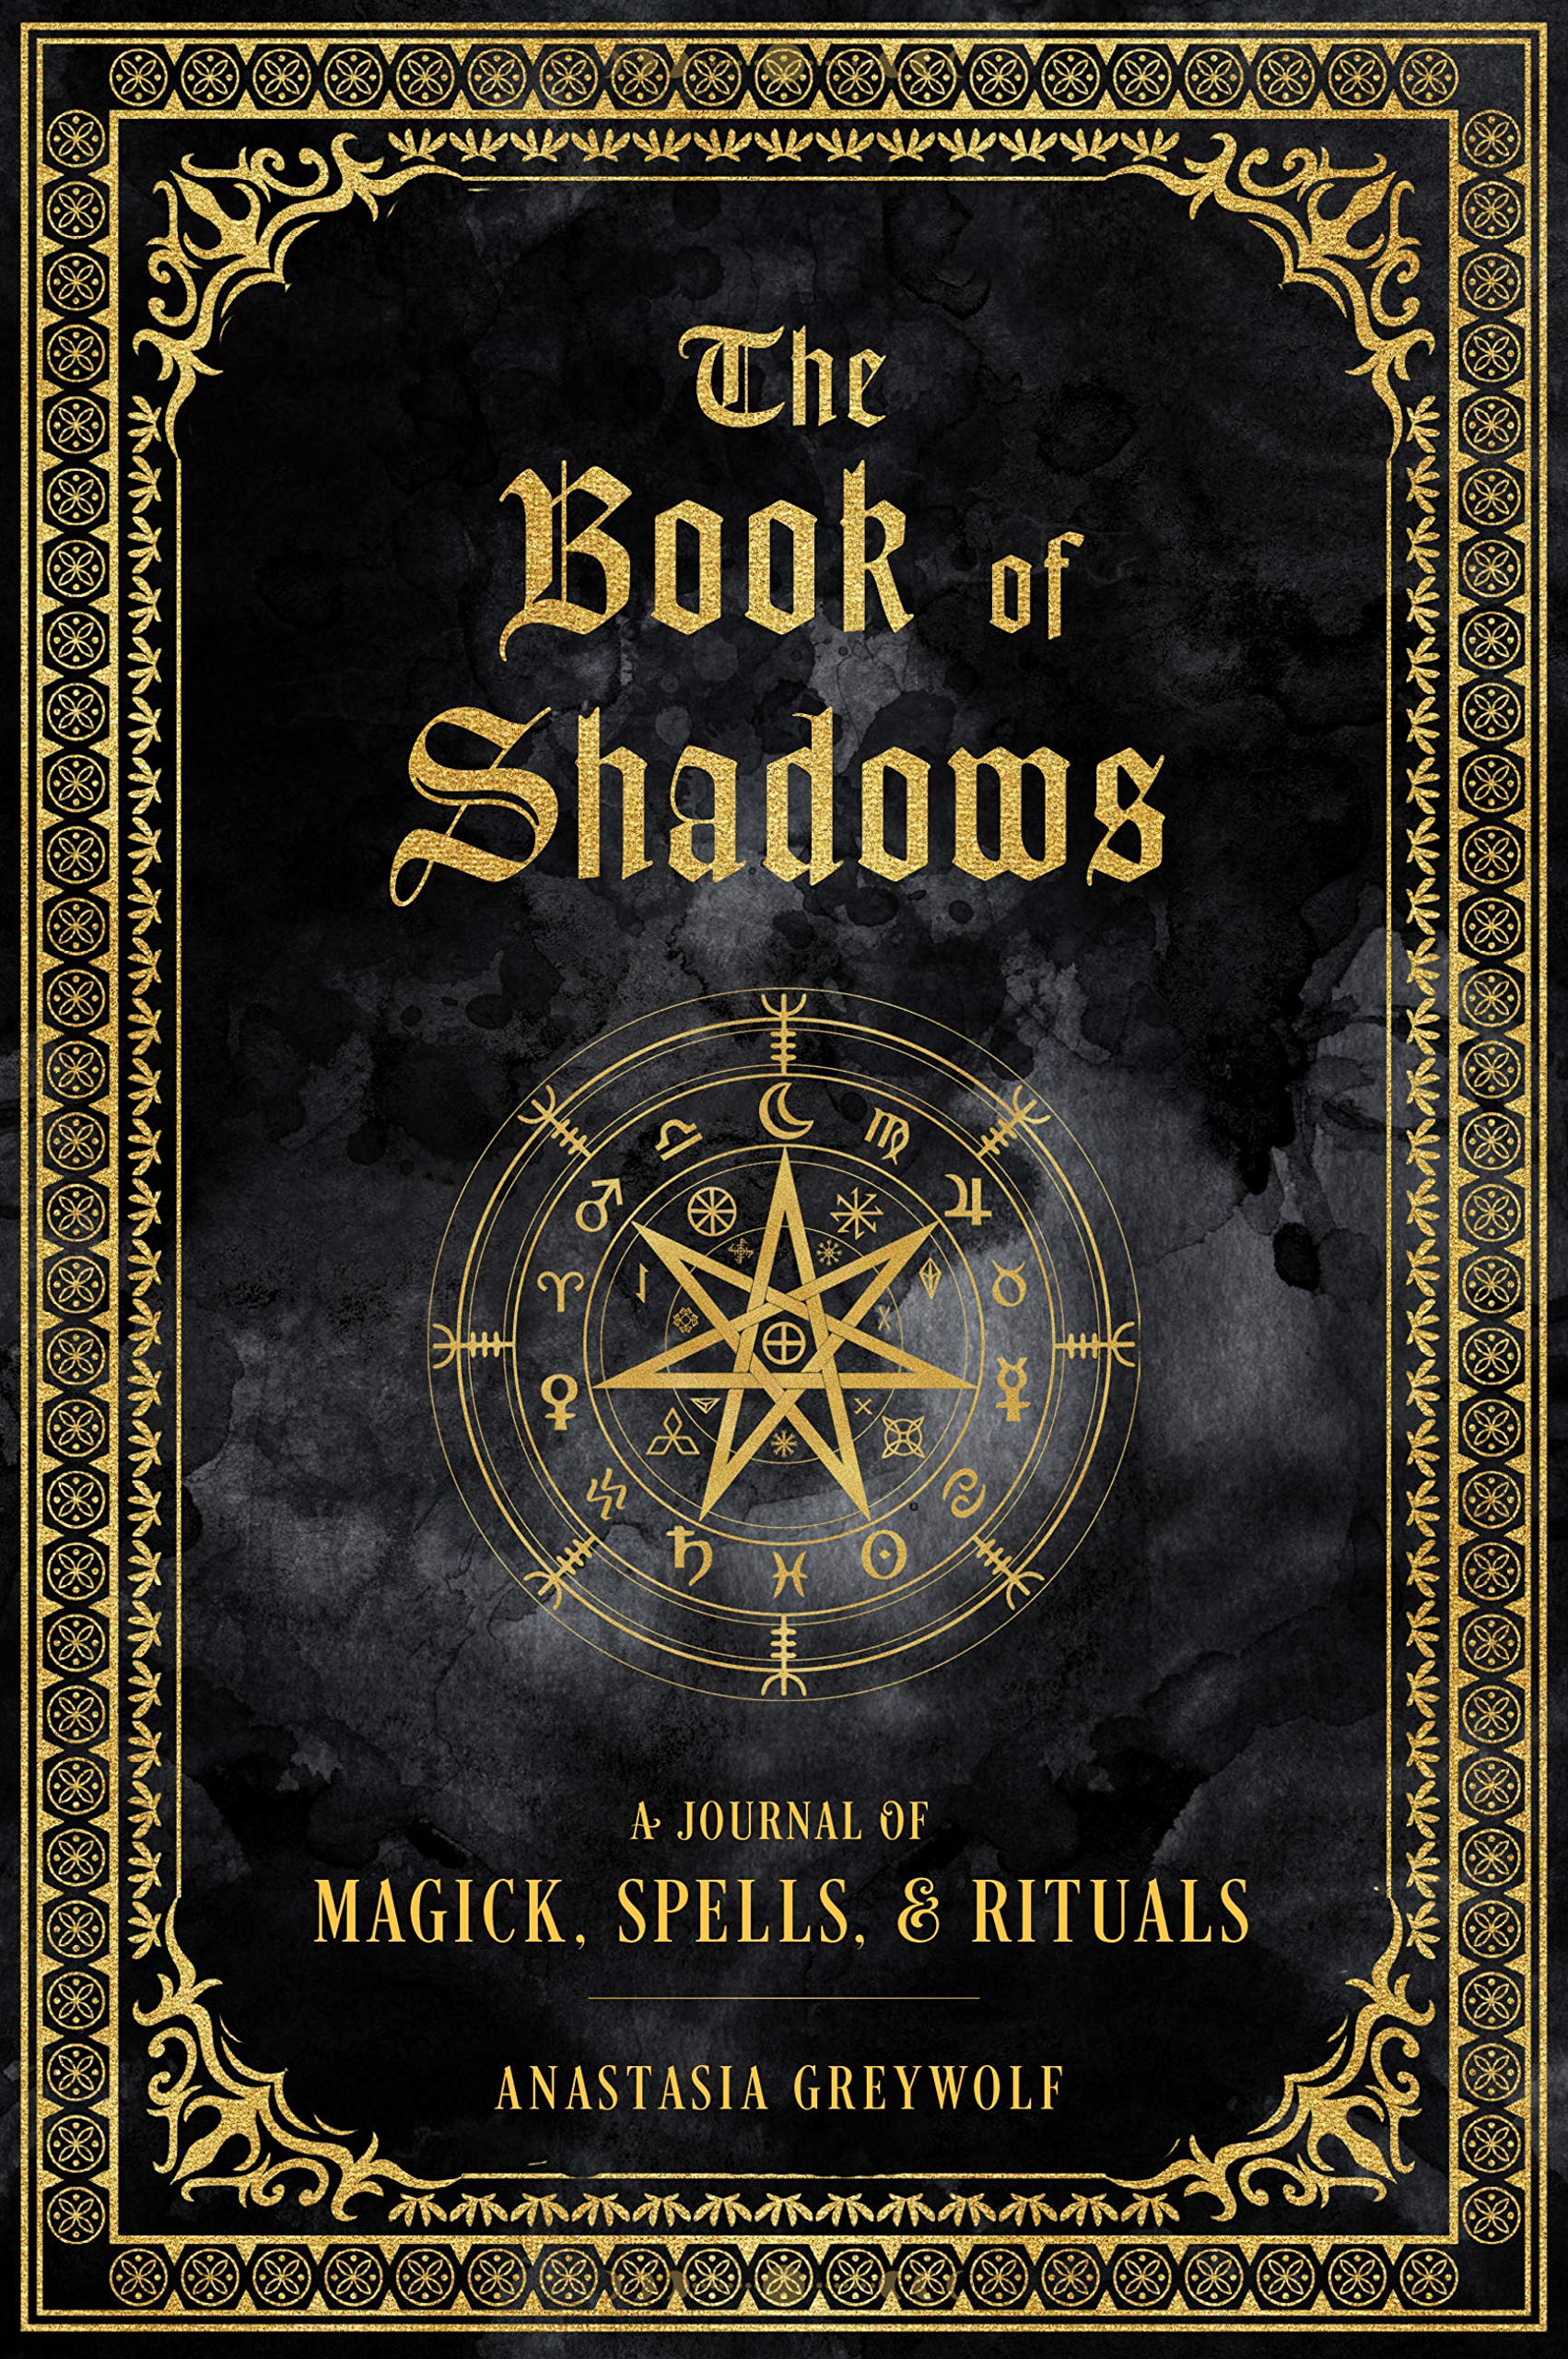 Book of shadows, Magick, Spells & Rituals by Anastasia Greywolf